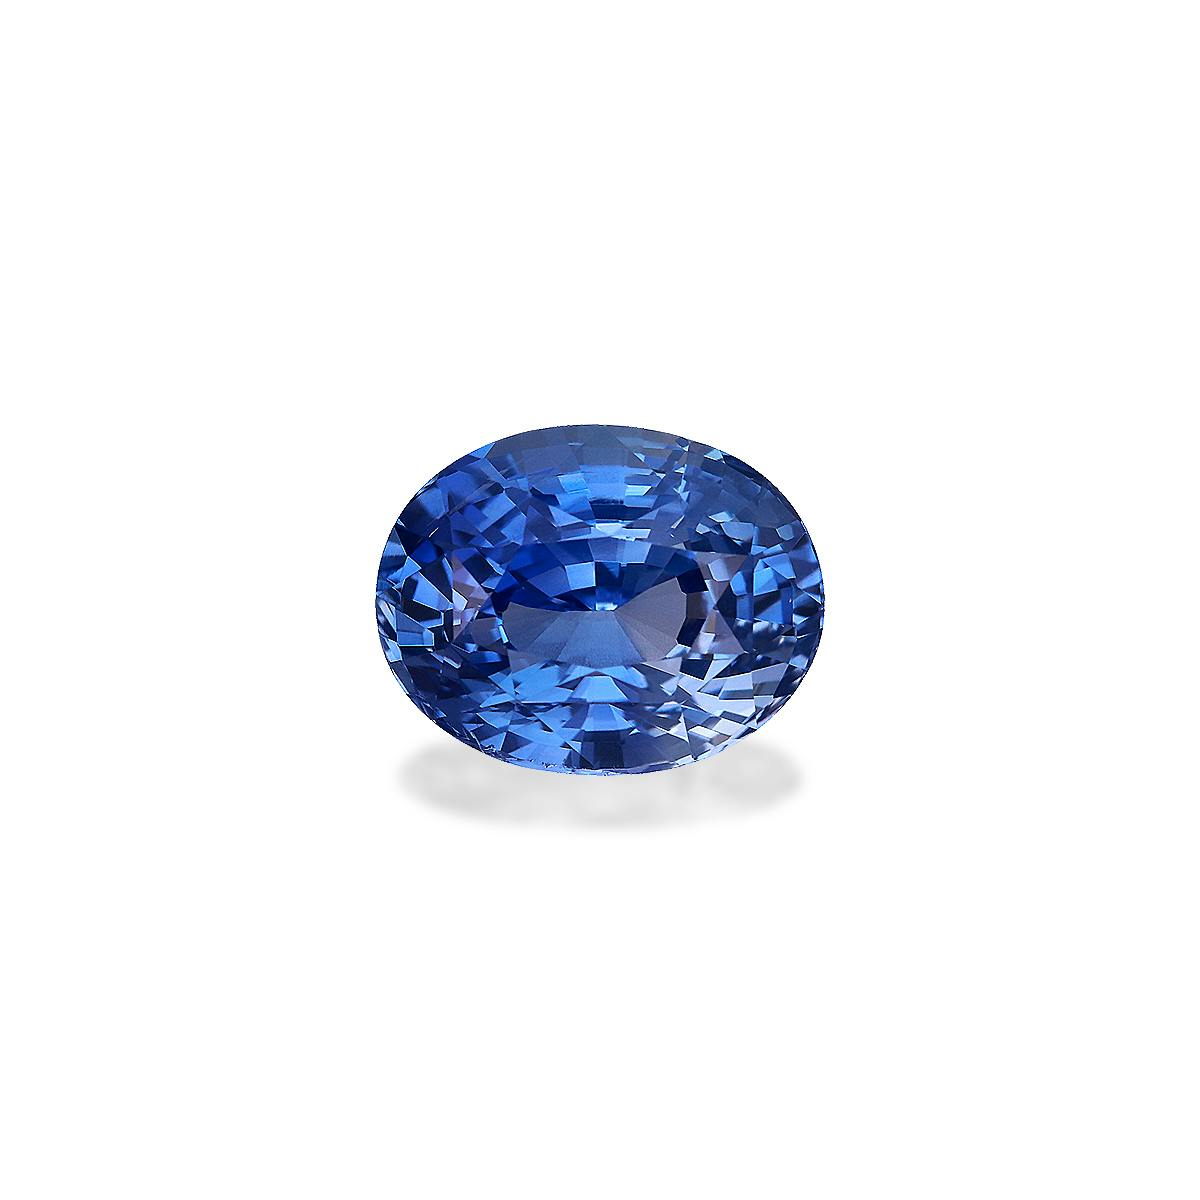 6.60 Ct Natural Kashmir Royal Blue Sapphire Perfect Round Cut Loose Gemstone 